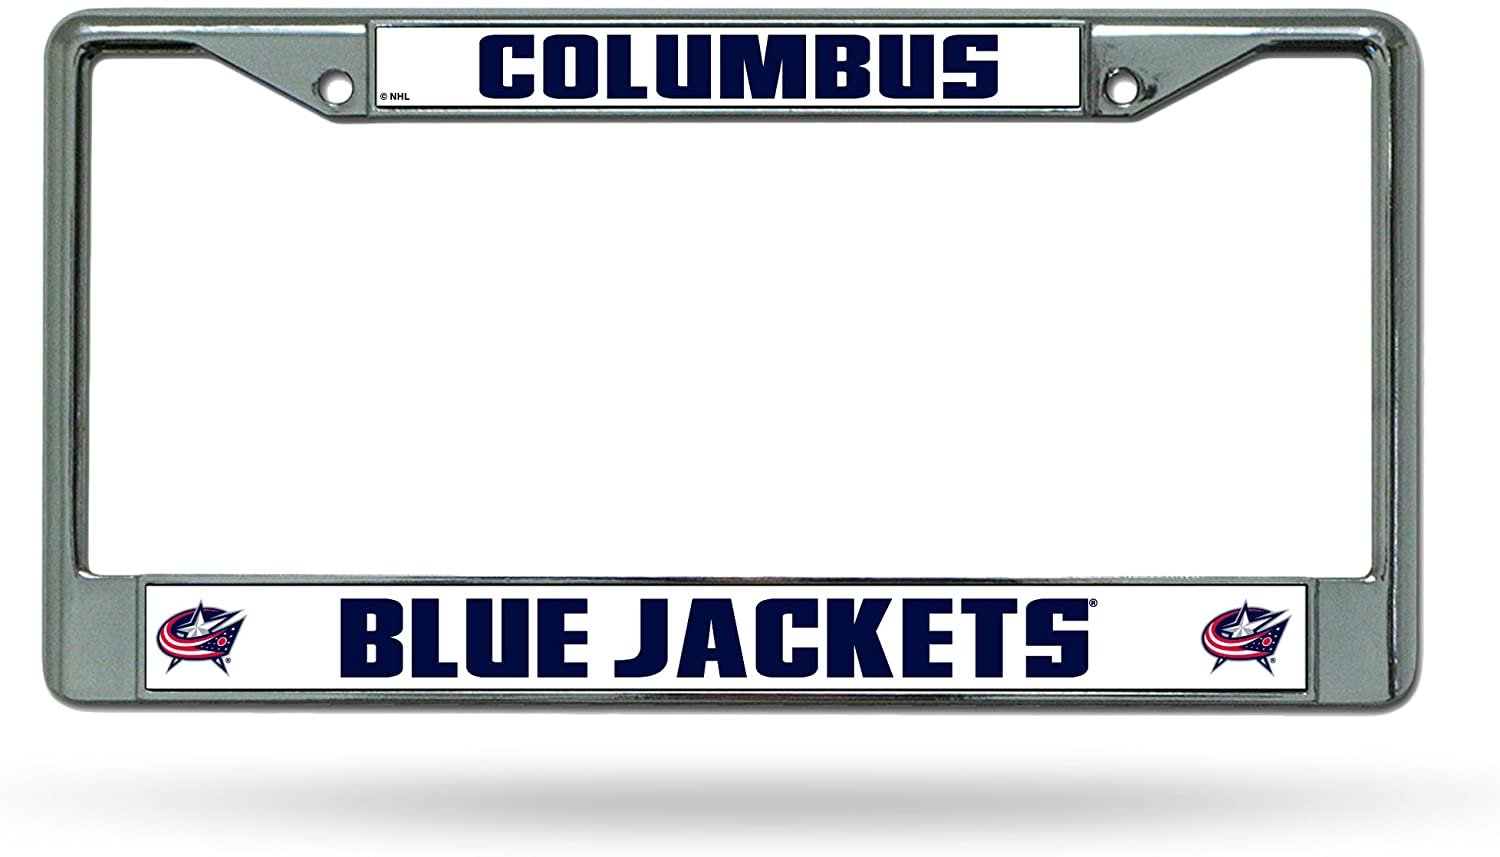 Columbus Blue Jackets Premium Metal License Plate Frame Chrome Tag Cover, 12x6 Inch